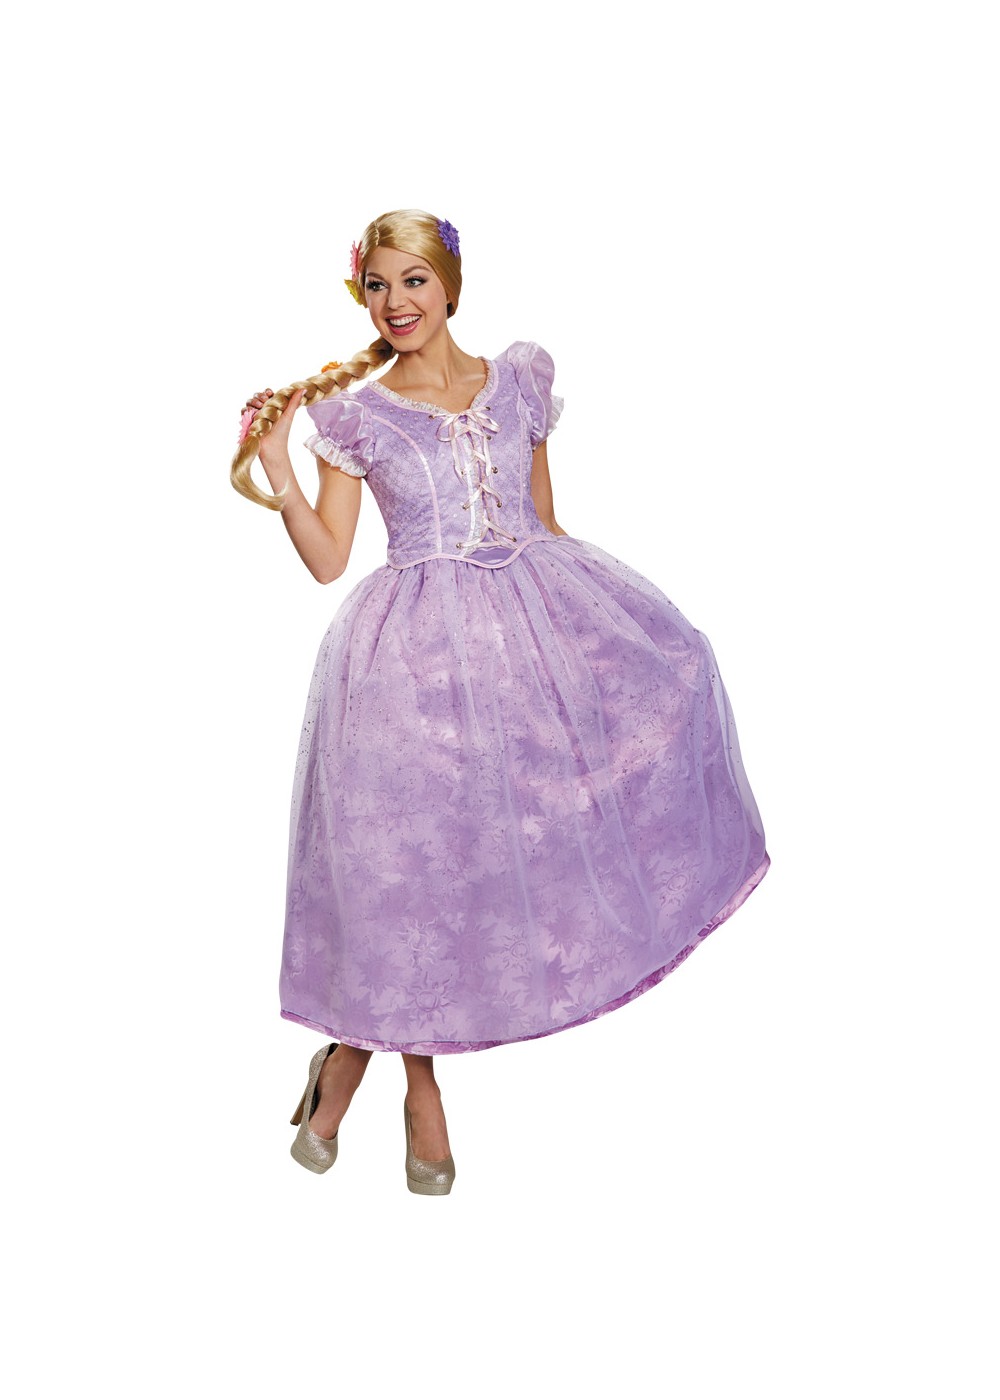 Womens Disney Rapunzel Costume Prestige